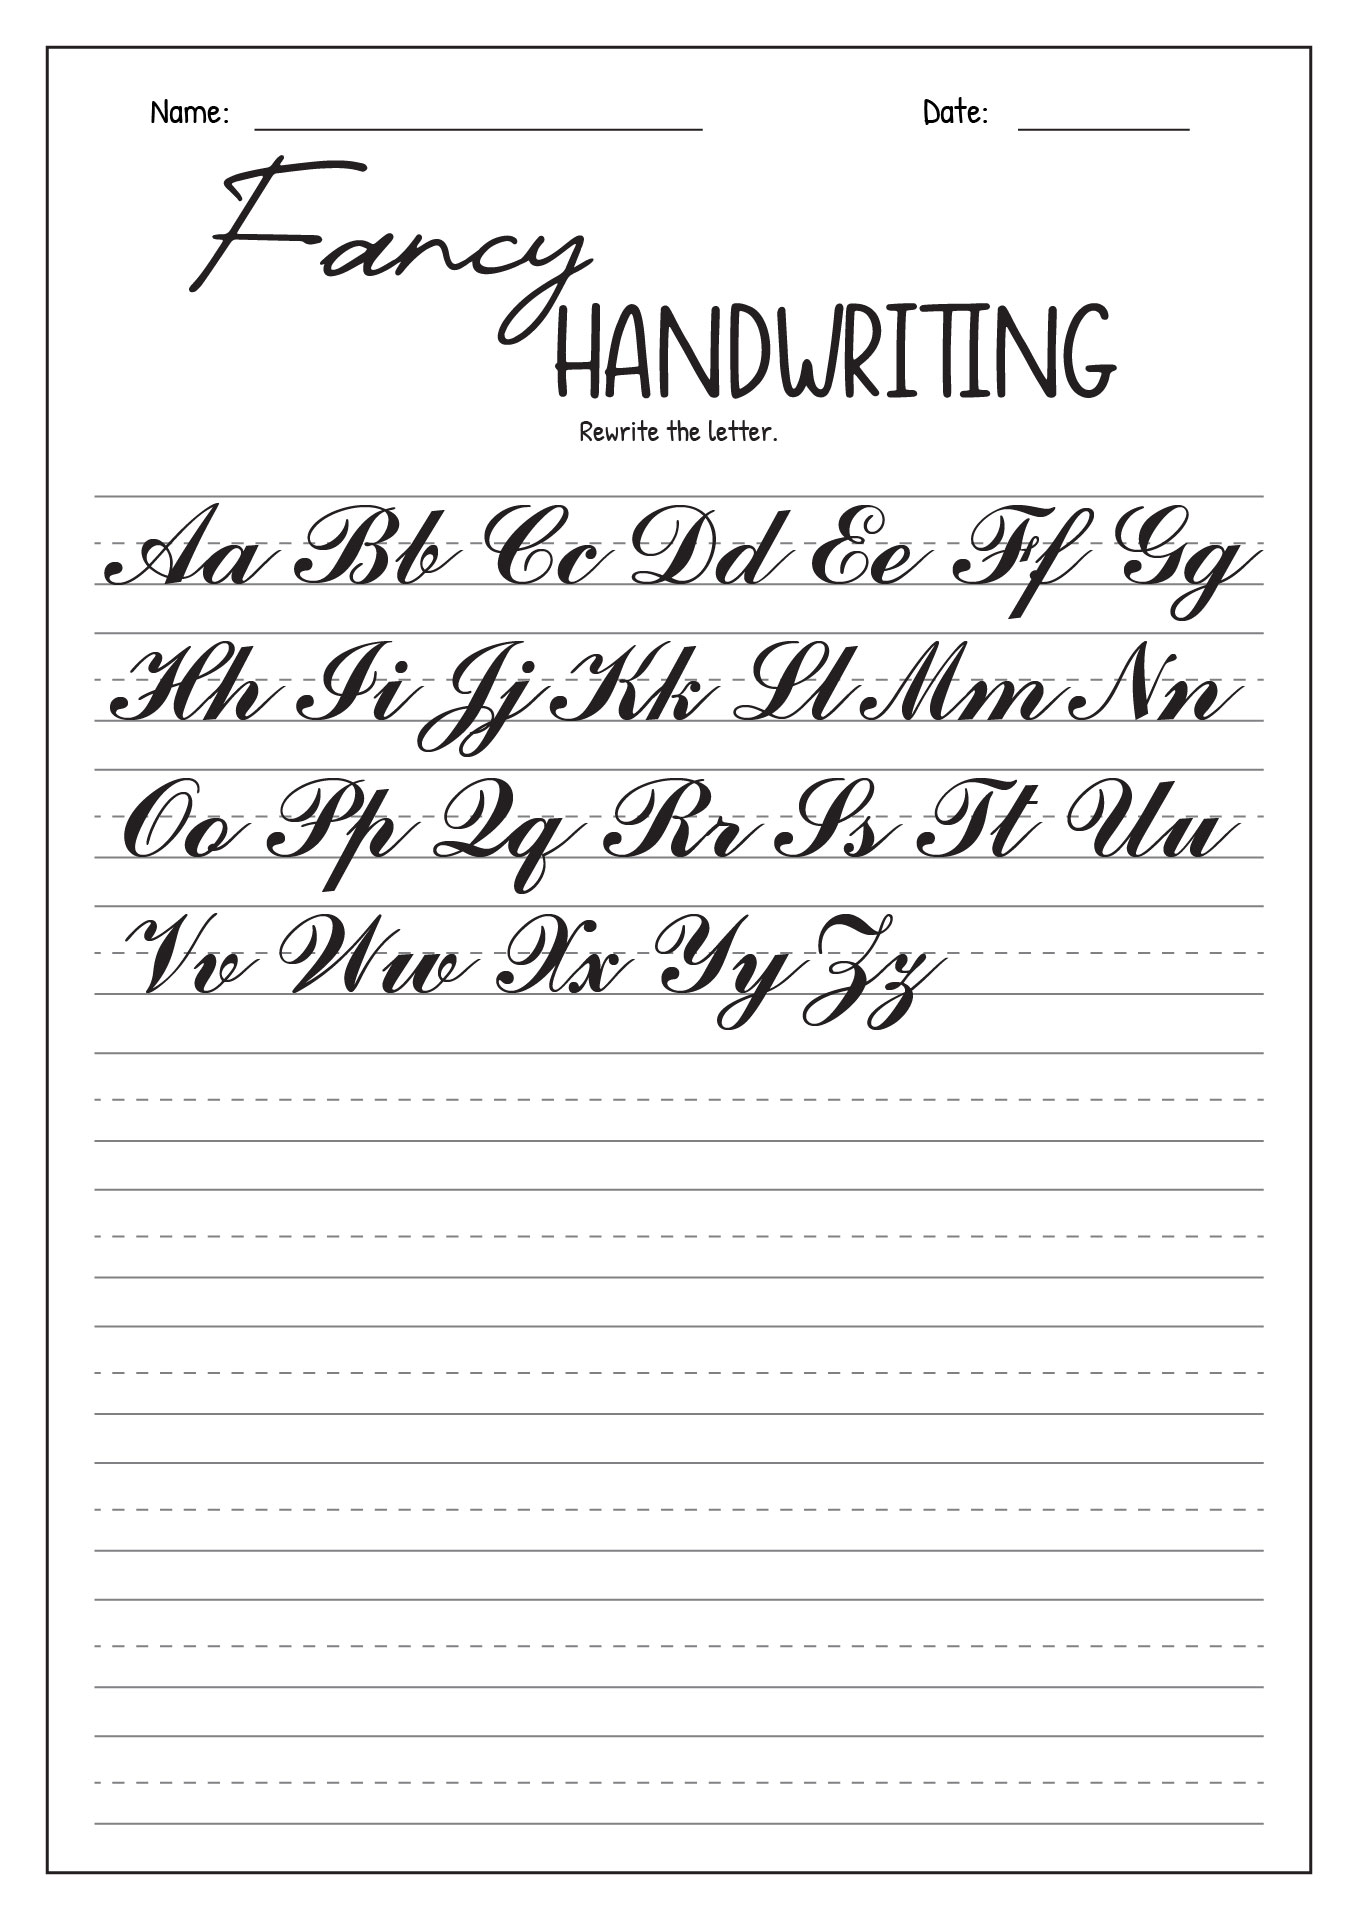 Fancy Handwriting Styles Image